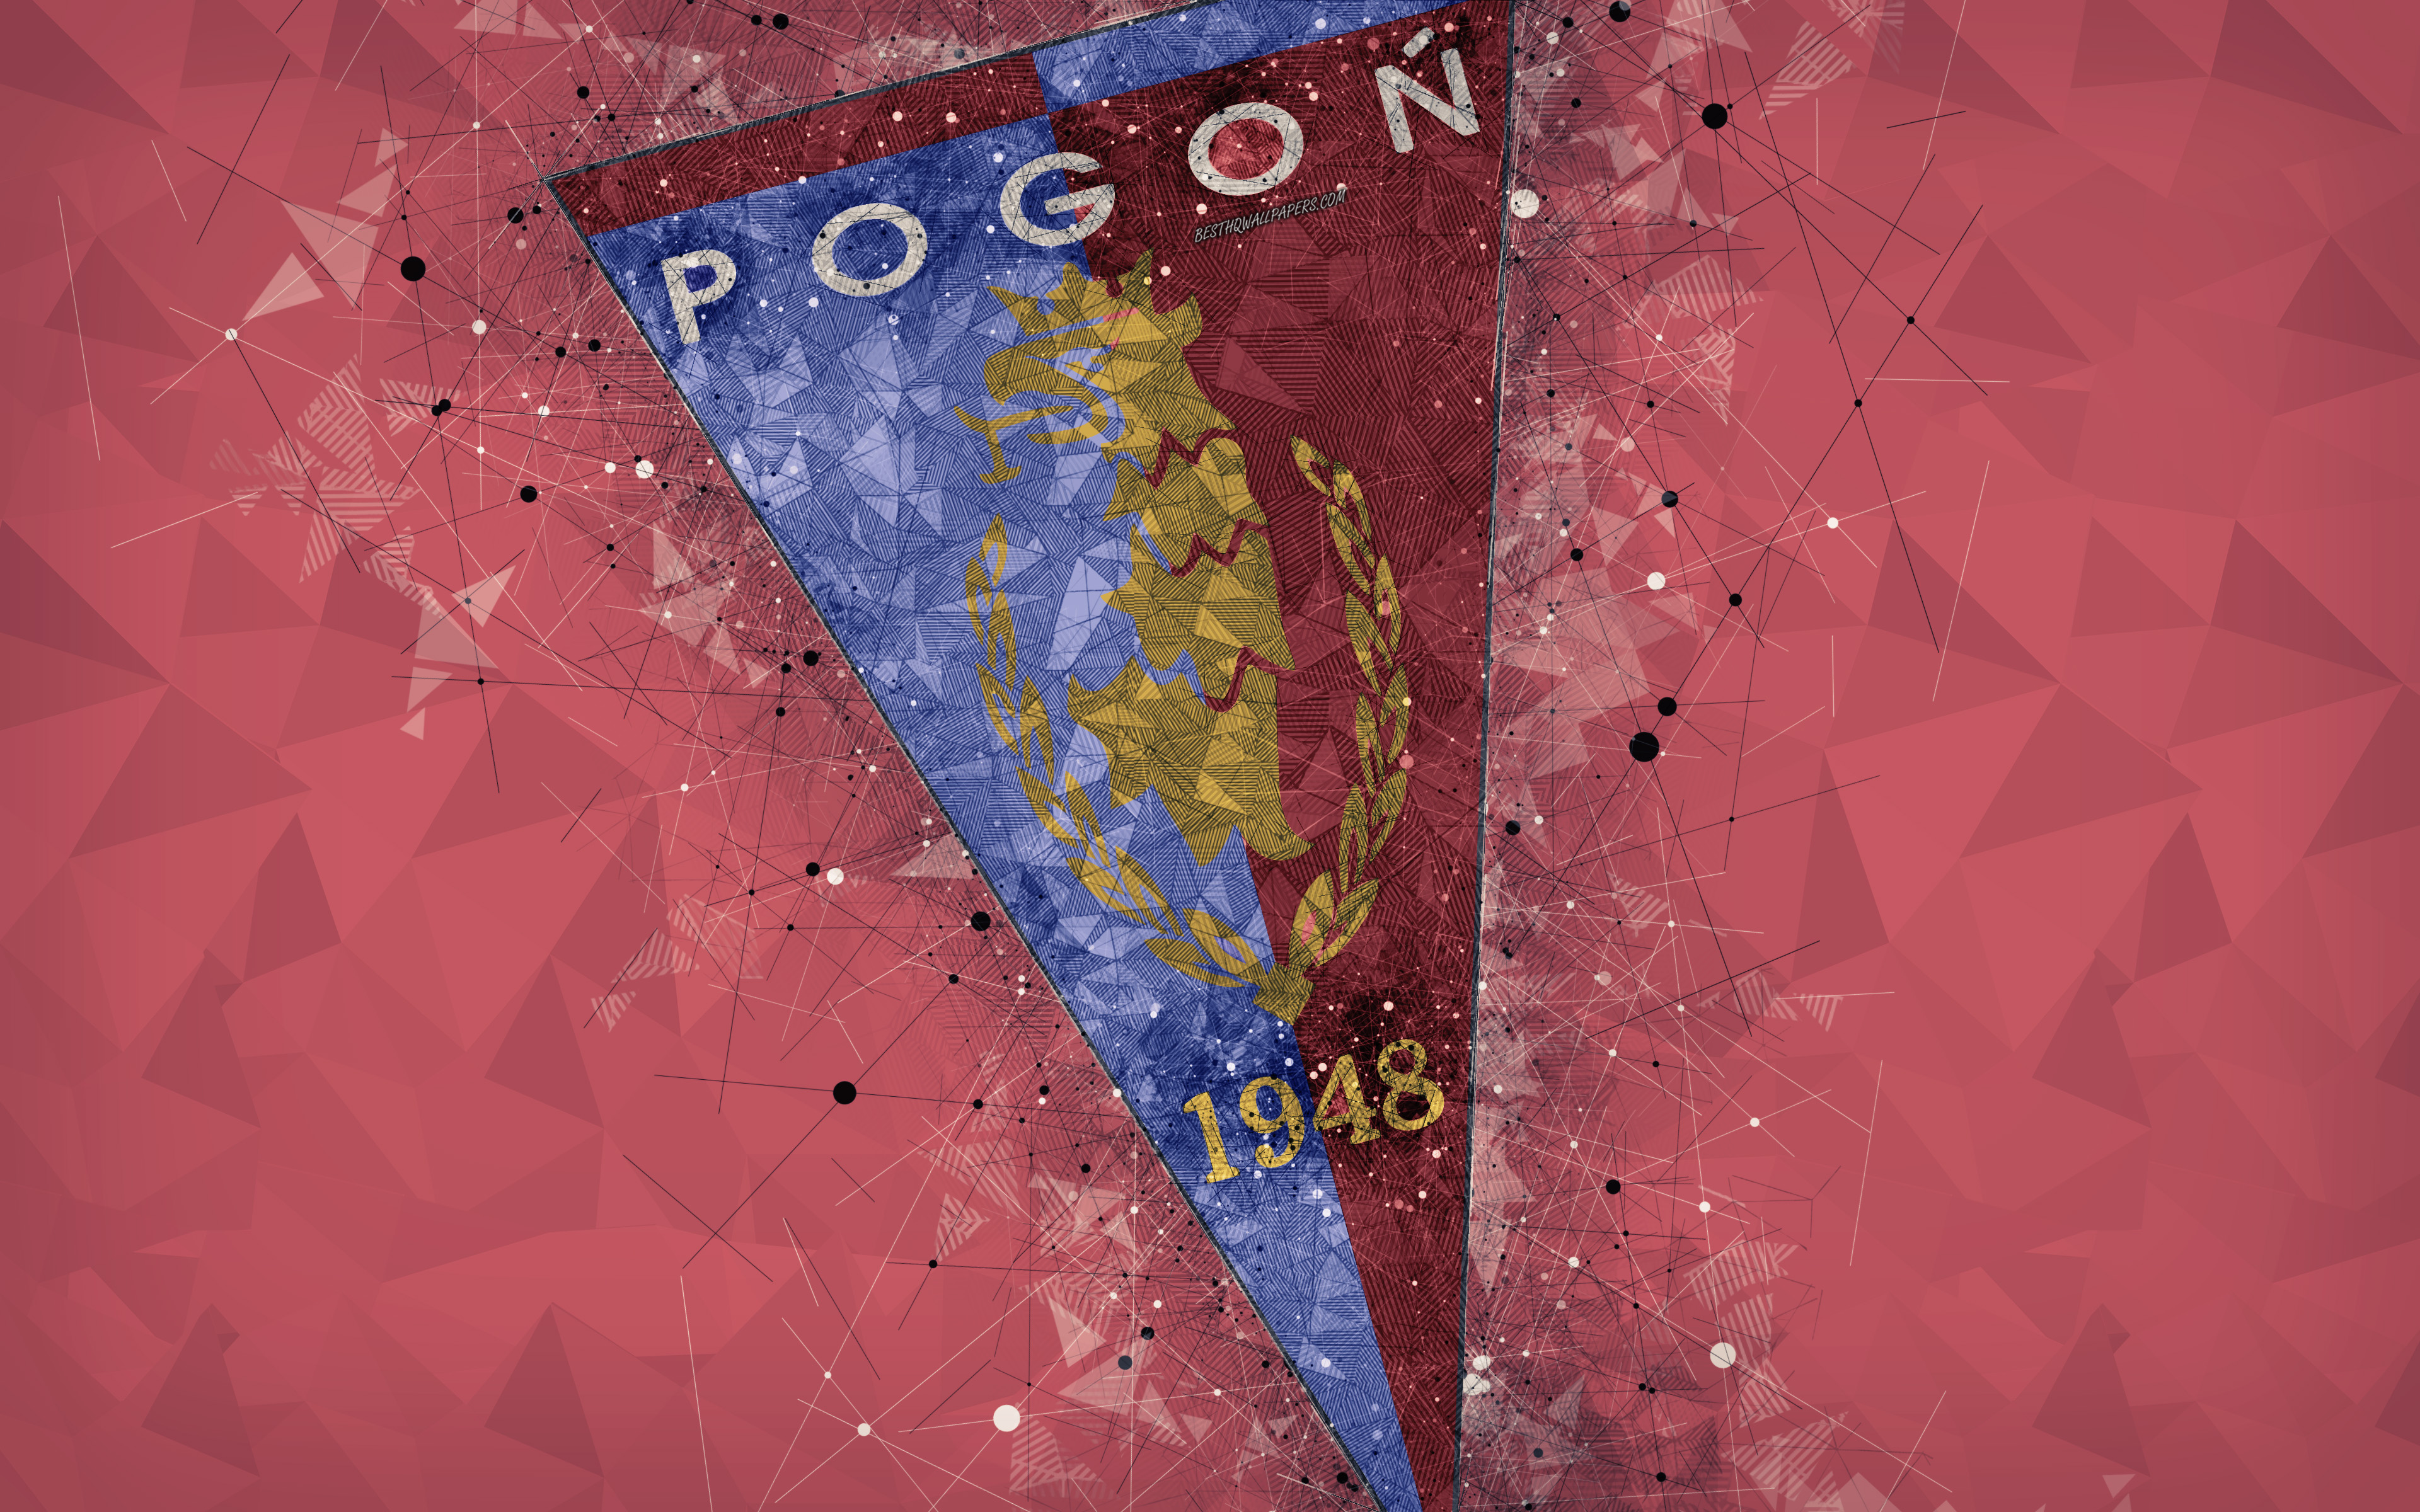 Pogon Szczecin Fc, 4k, Geometric Art, Logo, Red Abstract - Triangle - HD Wallpaper 